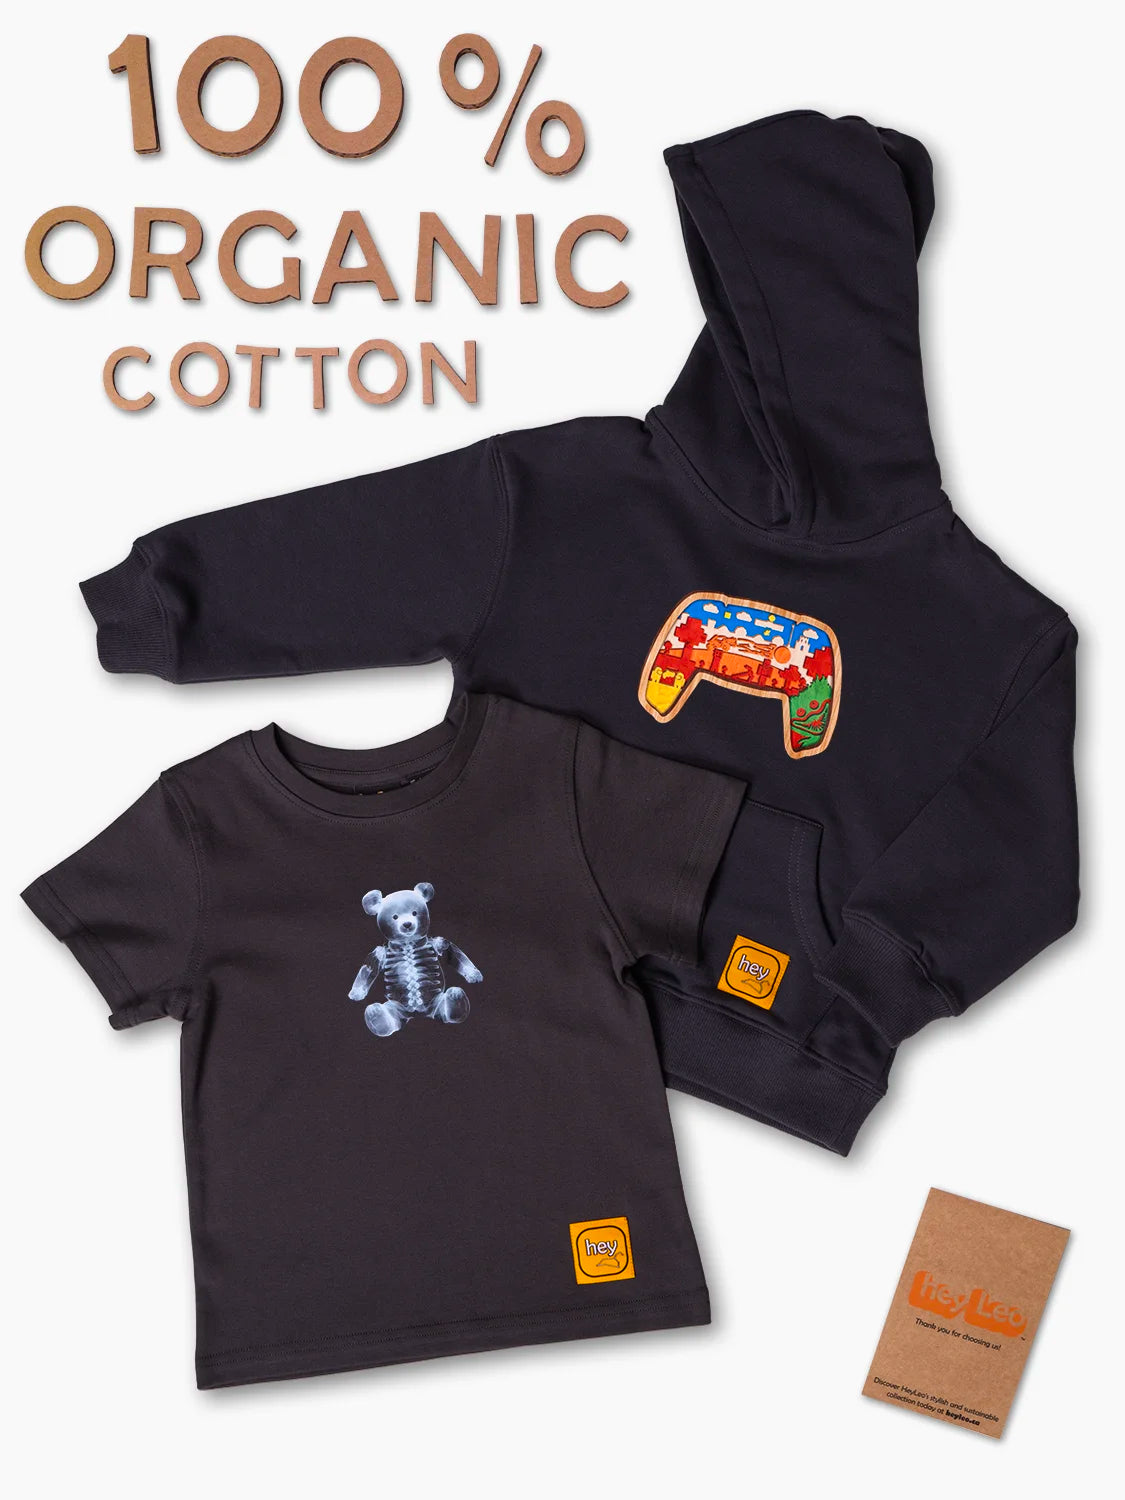 100% Organic Cotton 2-piece Outfit Set Spooky Games